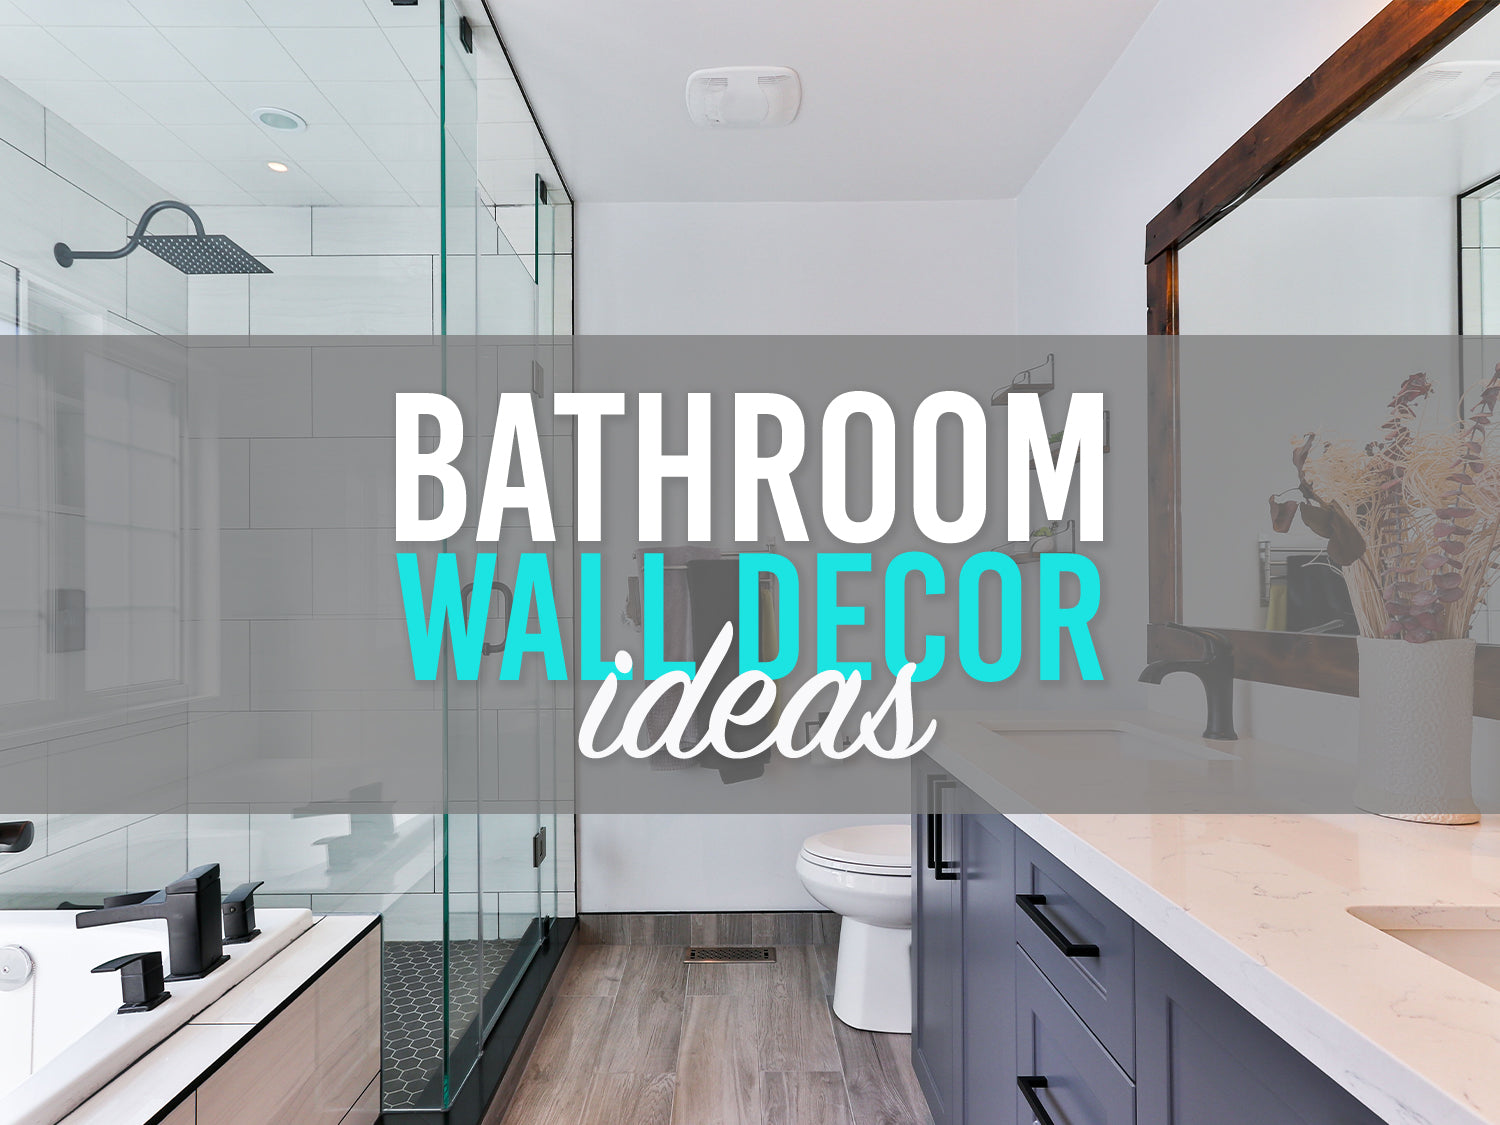 wall hanging ideas for bathroom